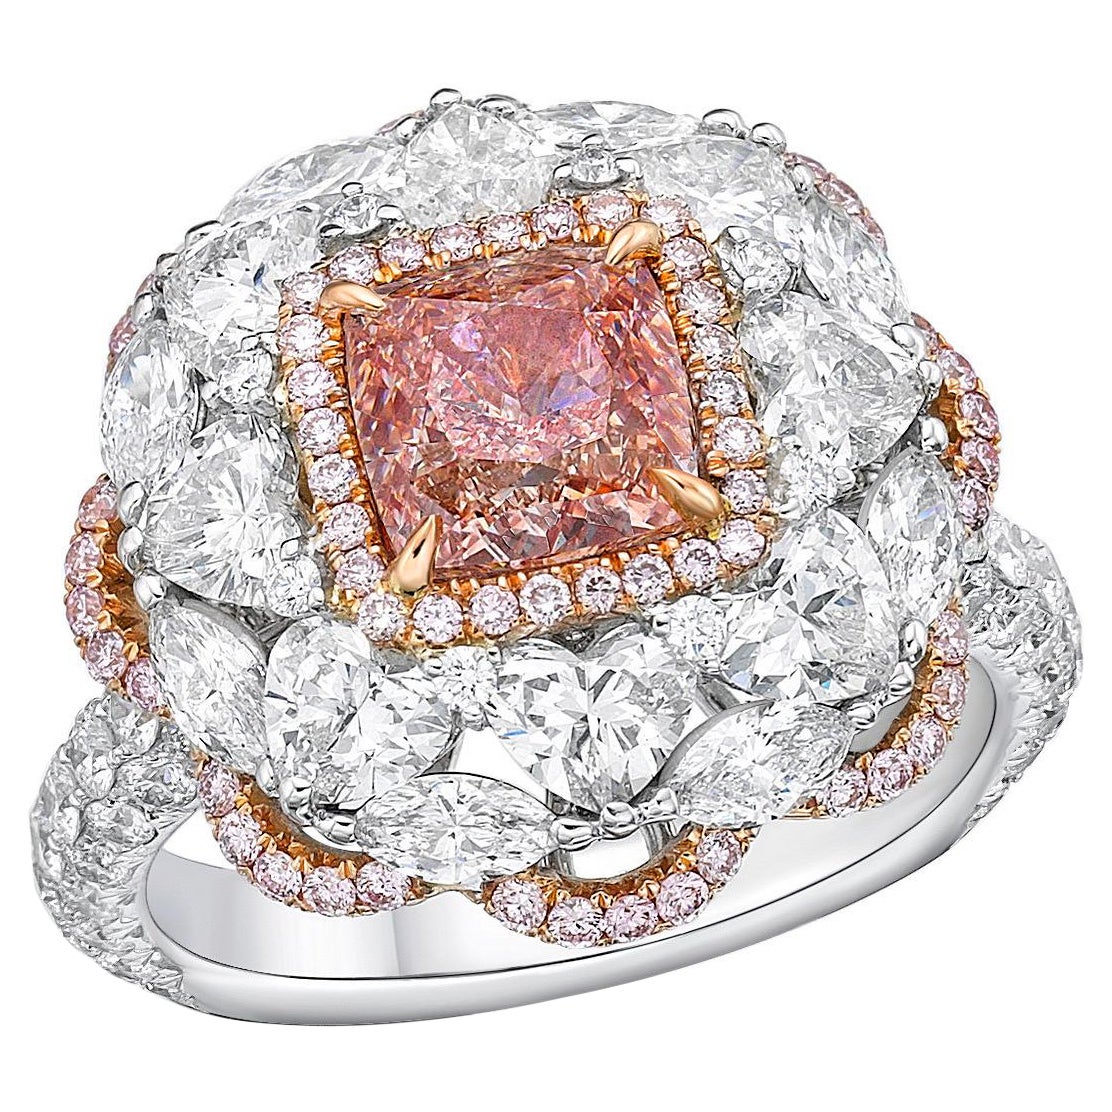 Emilio Jewelry, bague en diamant rose fantaisie de 1,50 carat certifié GIA